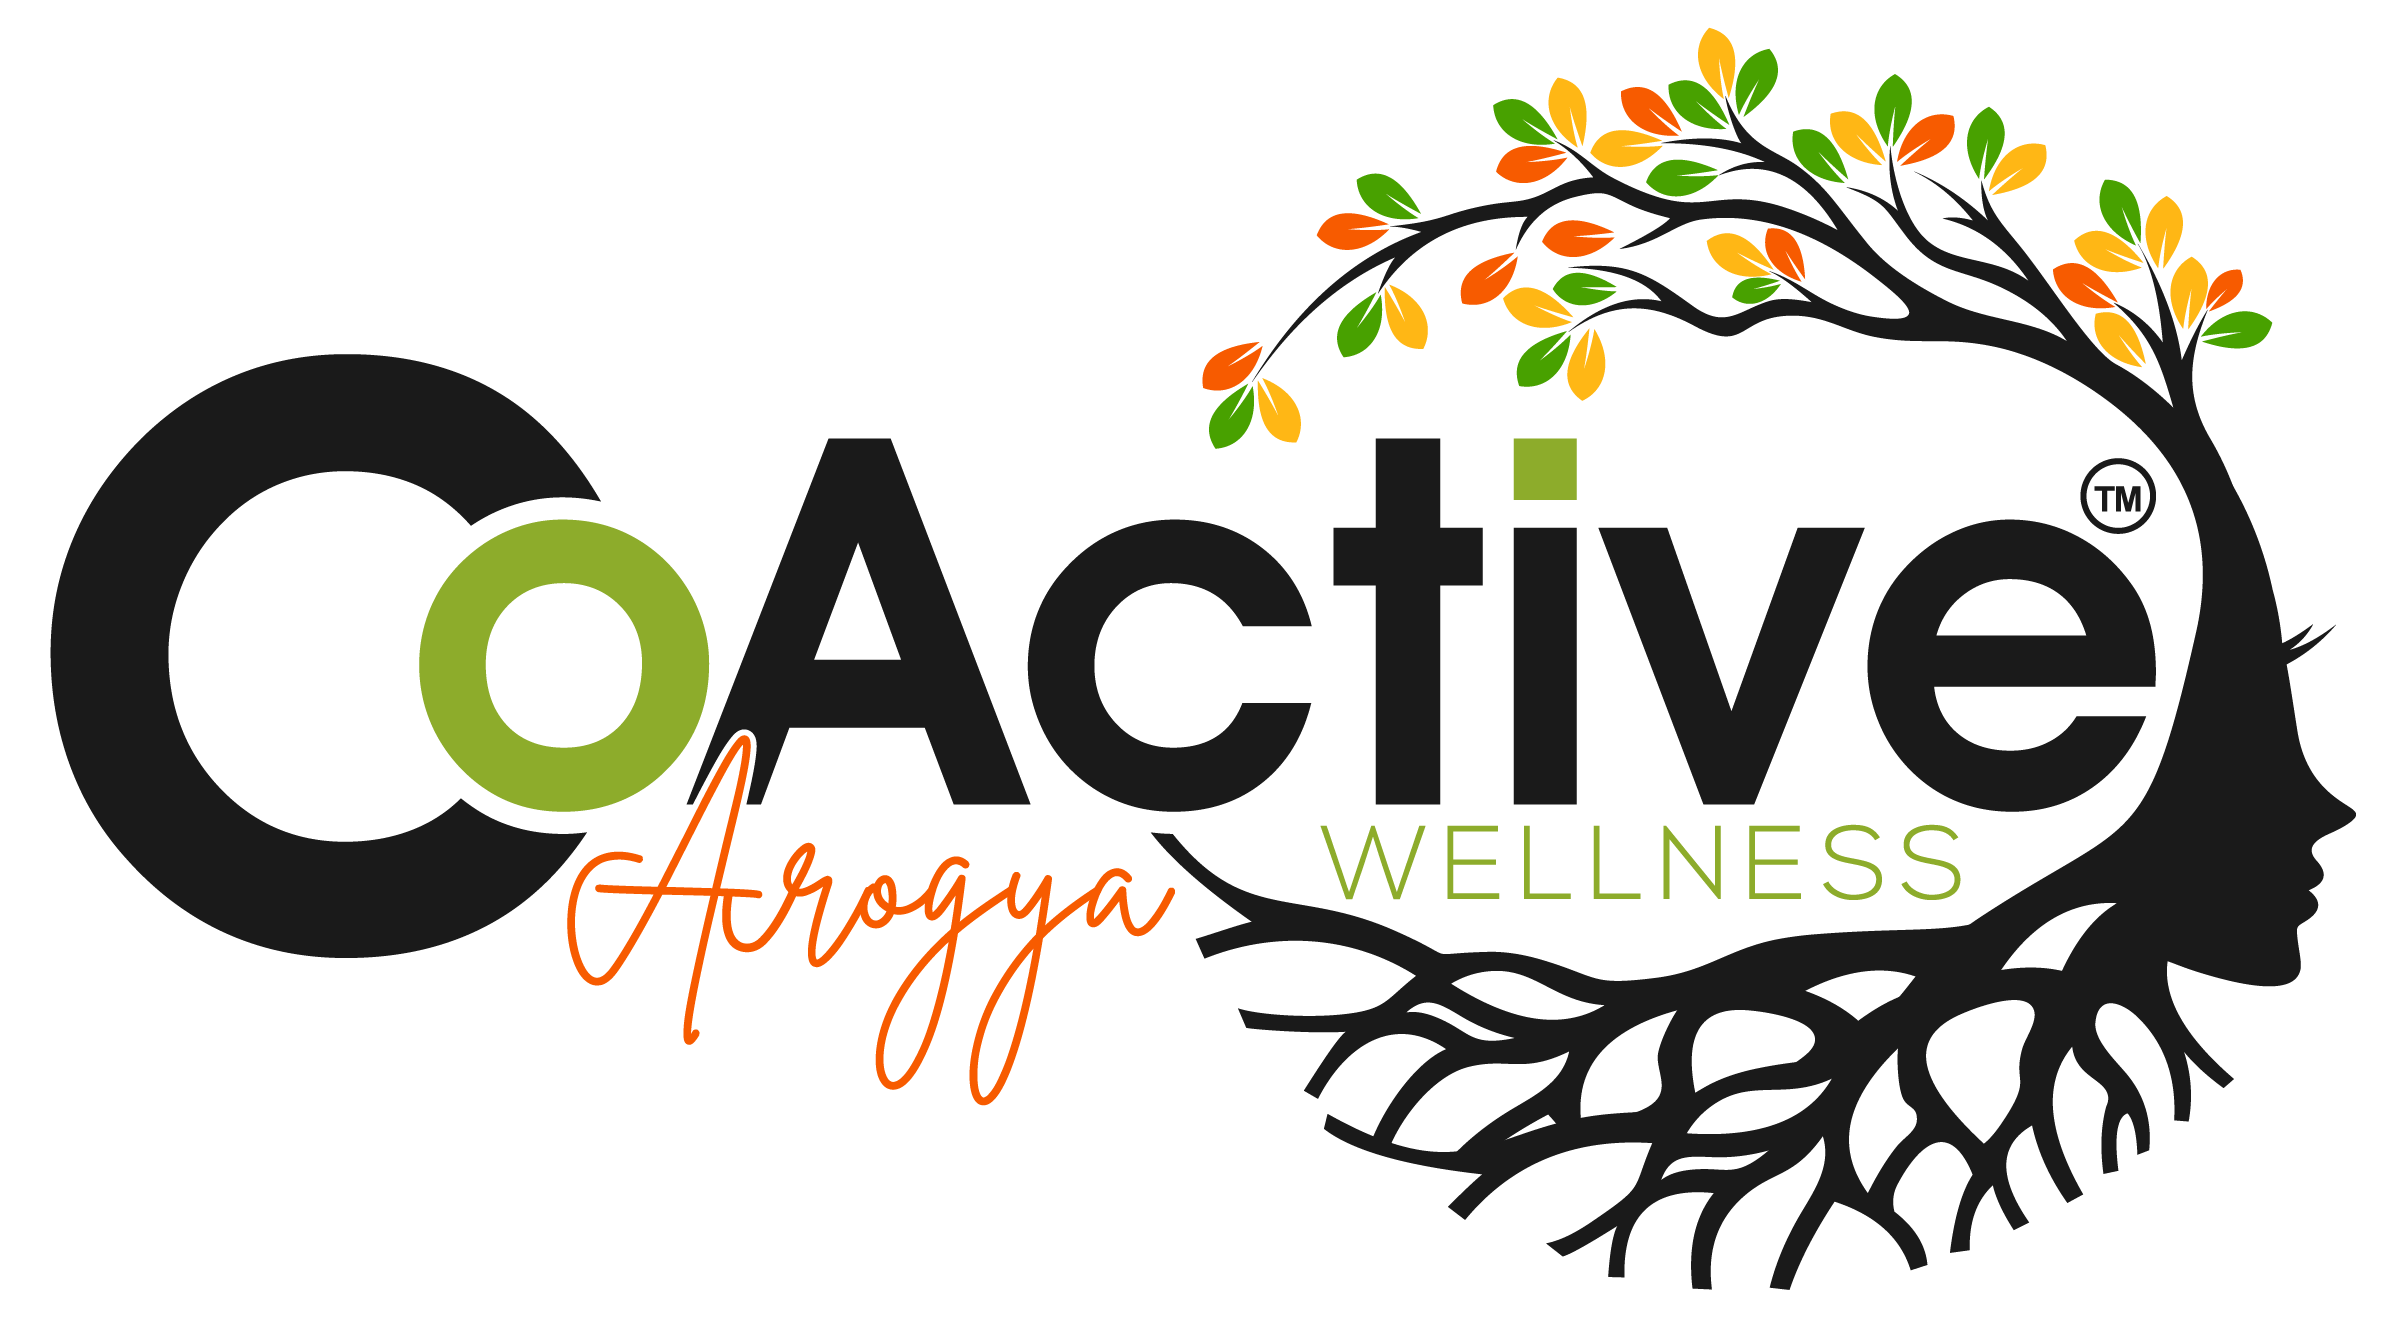 CoActive Wellness, LLC